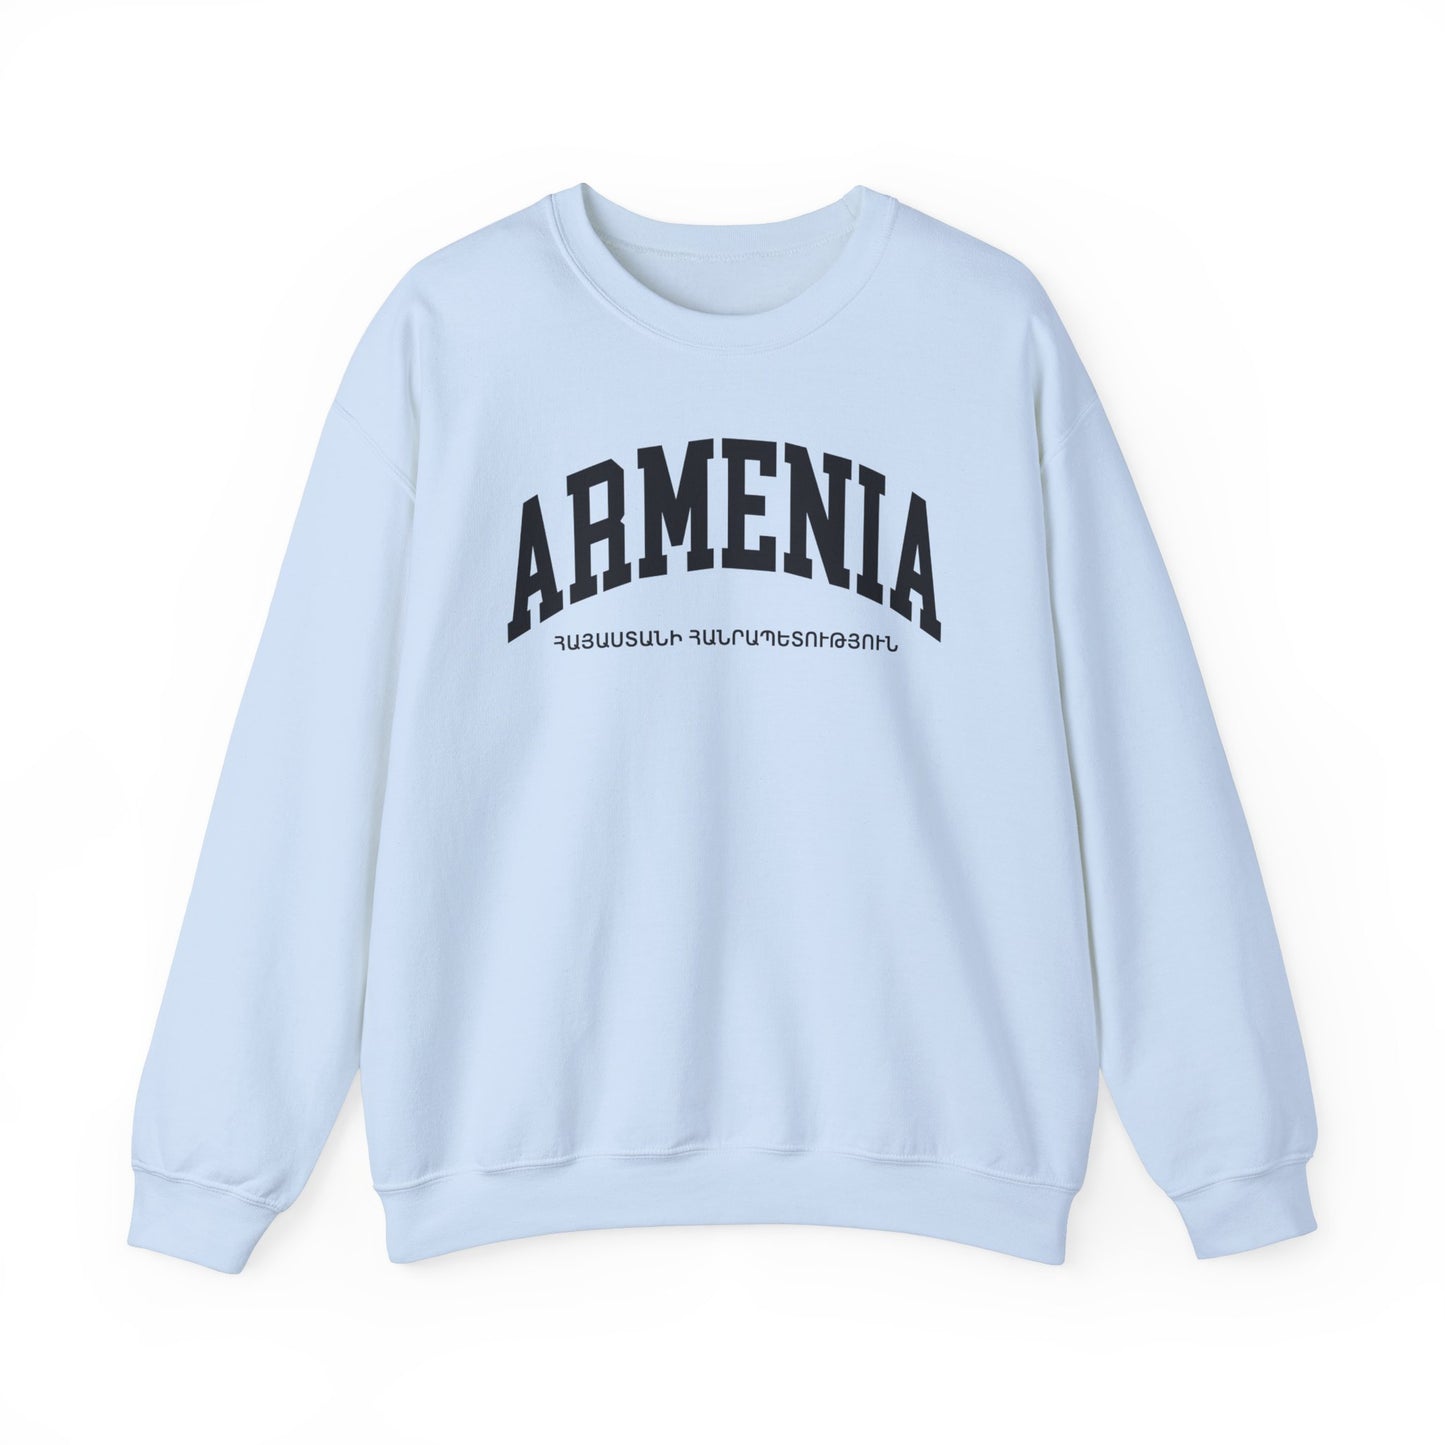 Armenia Sweatshirt